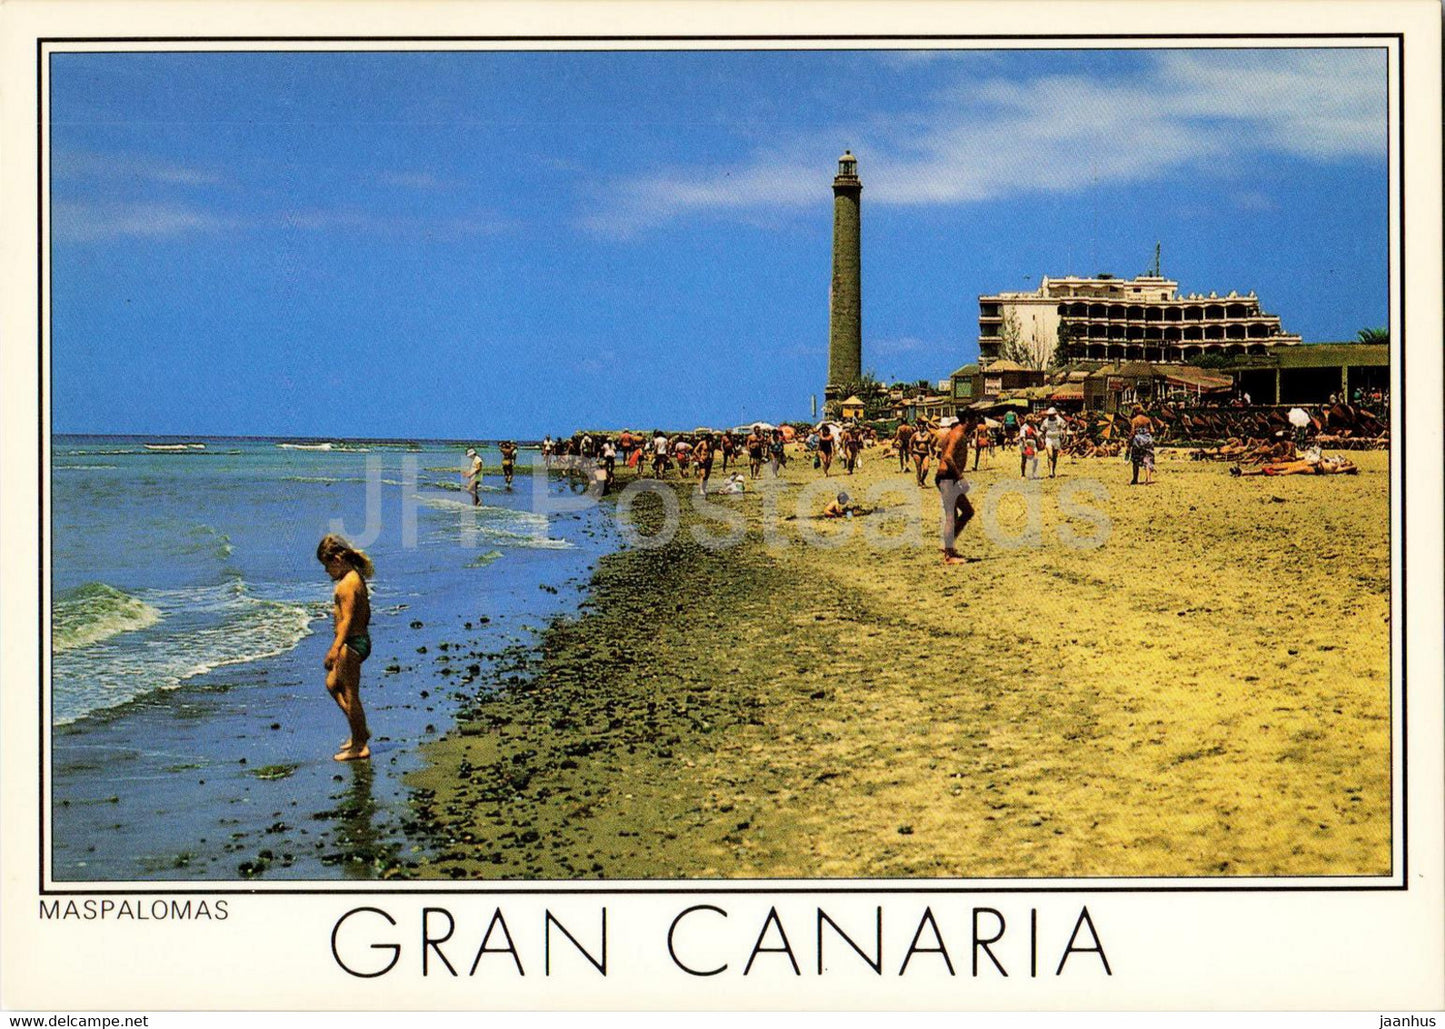 Gran Canaria - Playa del Maspalomas - 546 - beach - Spain - unused - JH Postcards